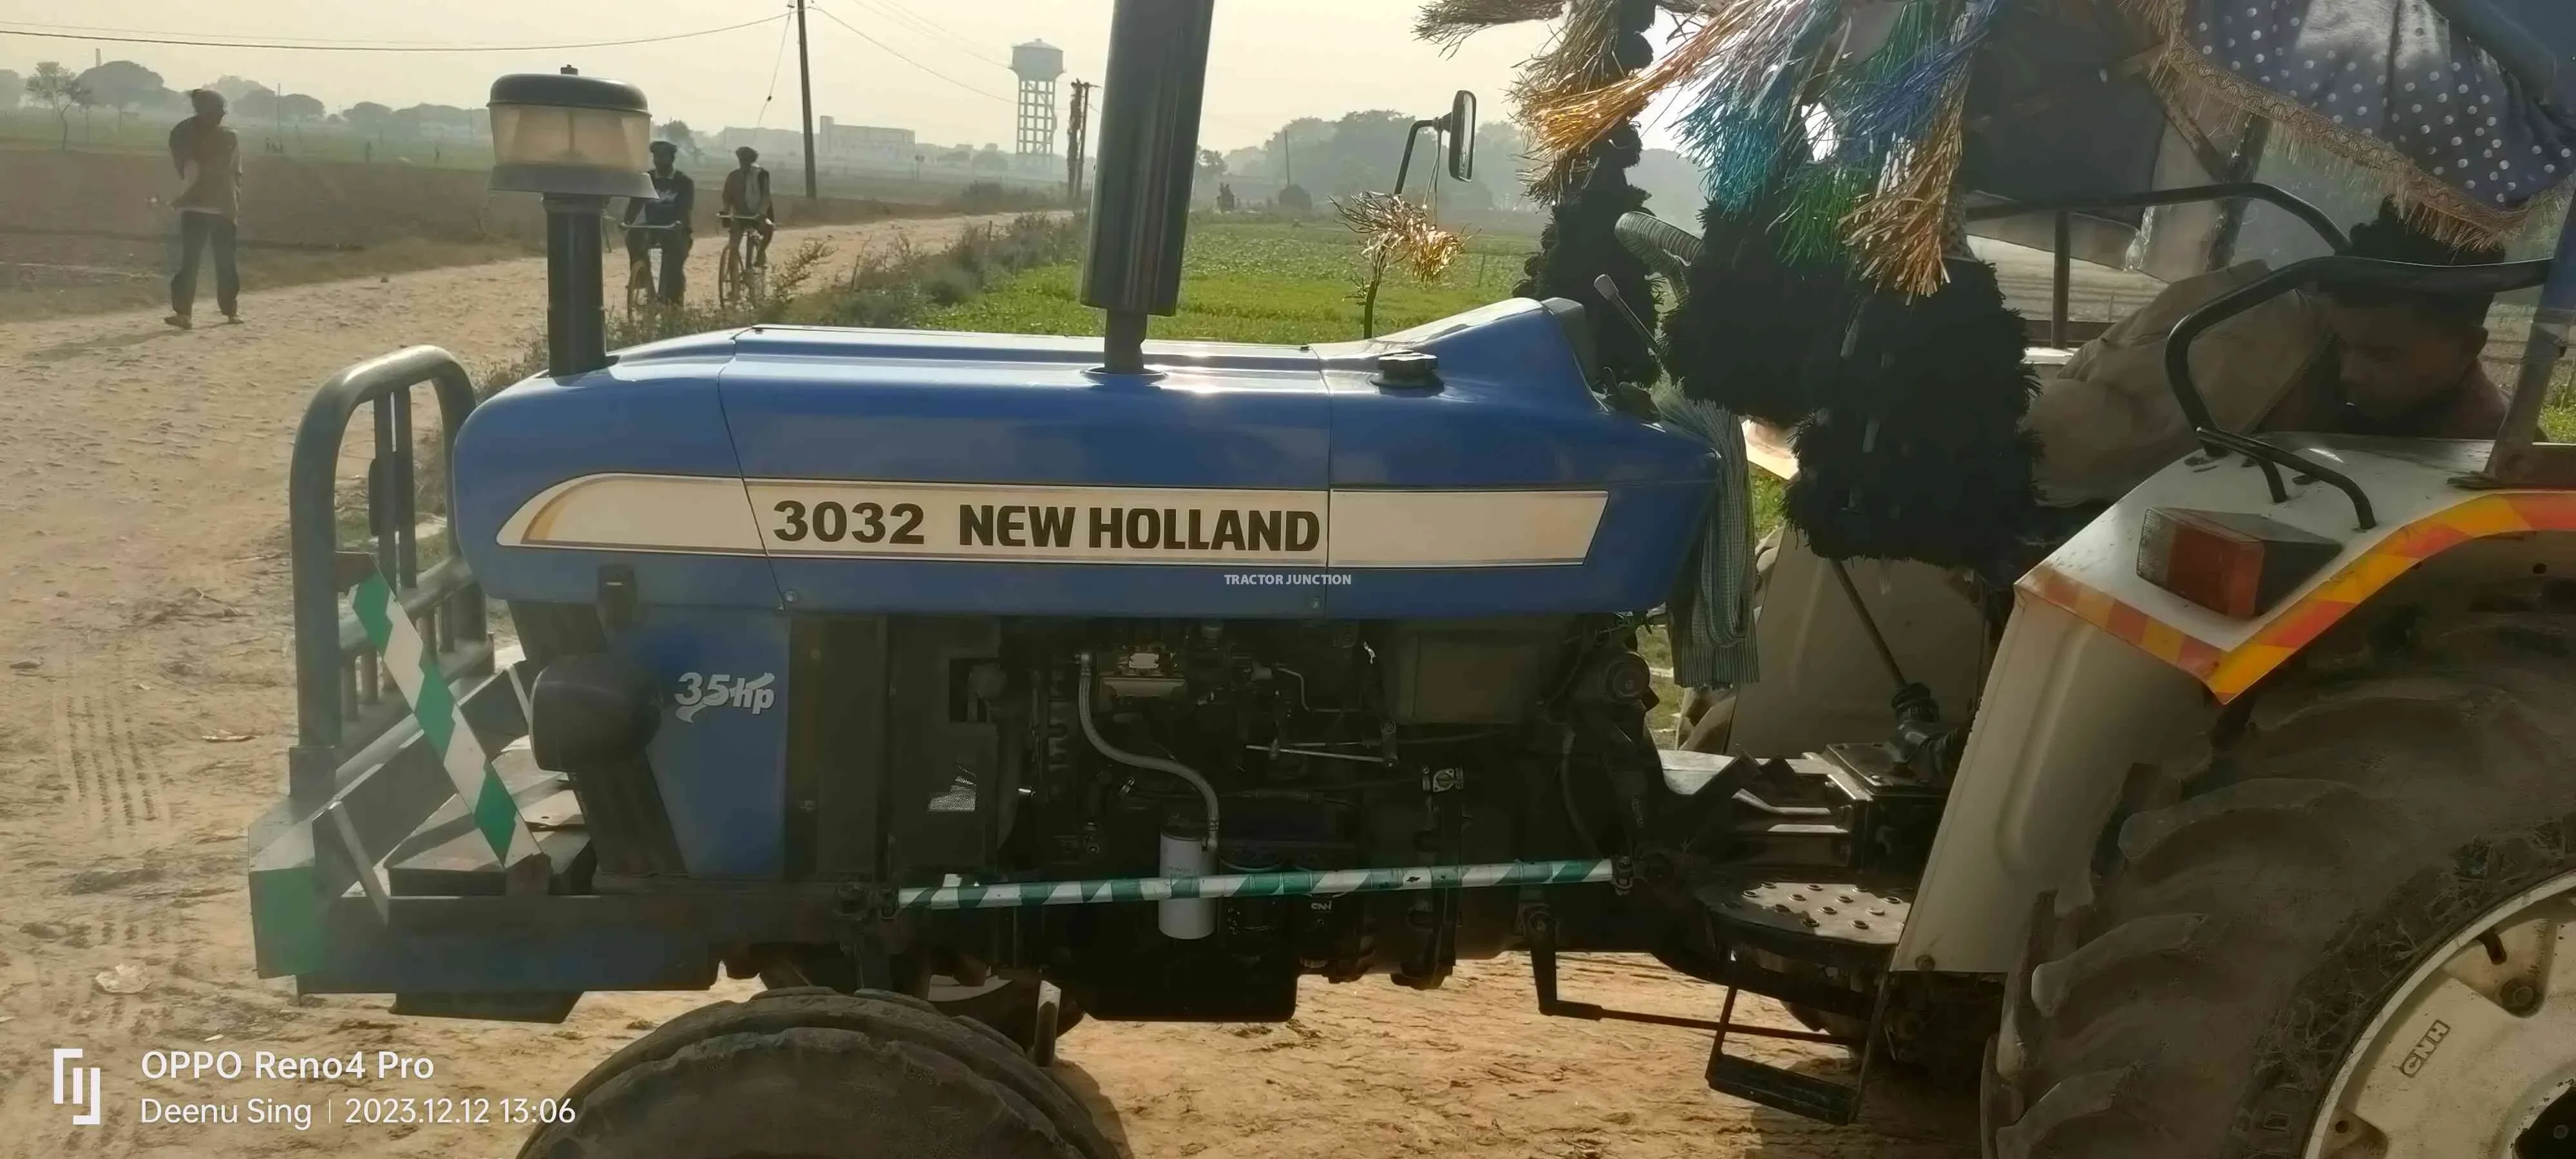 New Holland 3032 Nx